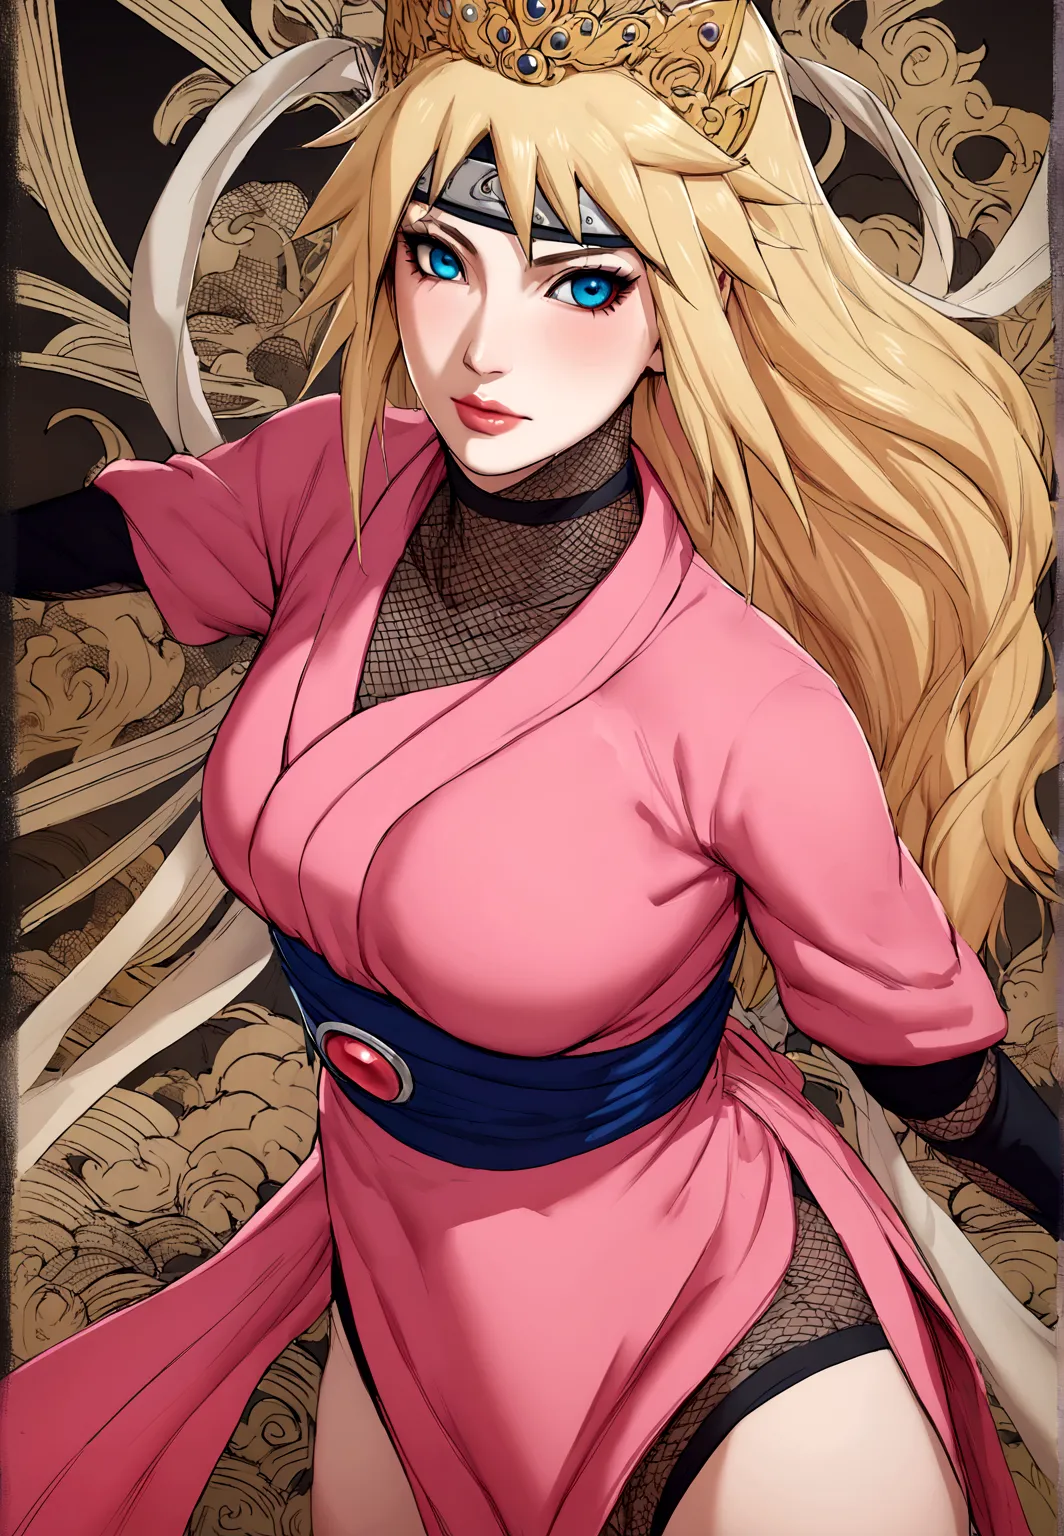 princess peach if she were a ninja from the naruto series